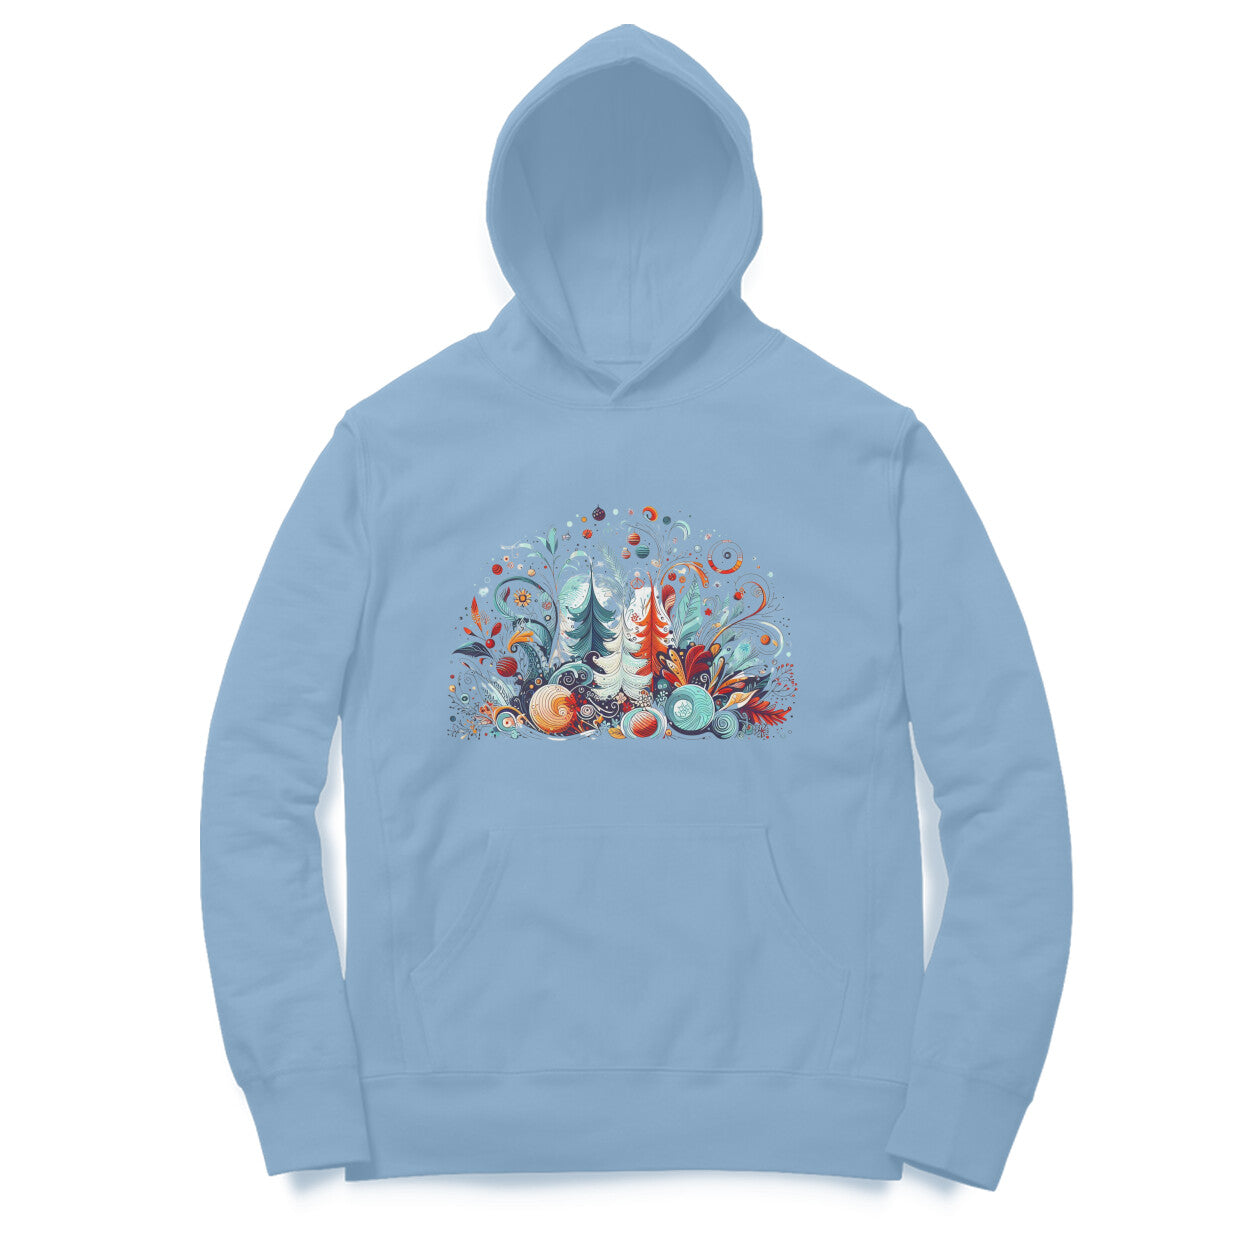 Winter Wonderland Men's Printed Hoodie - Christmas Magic Edition